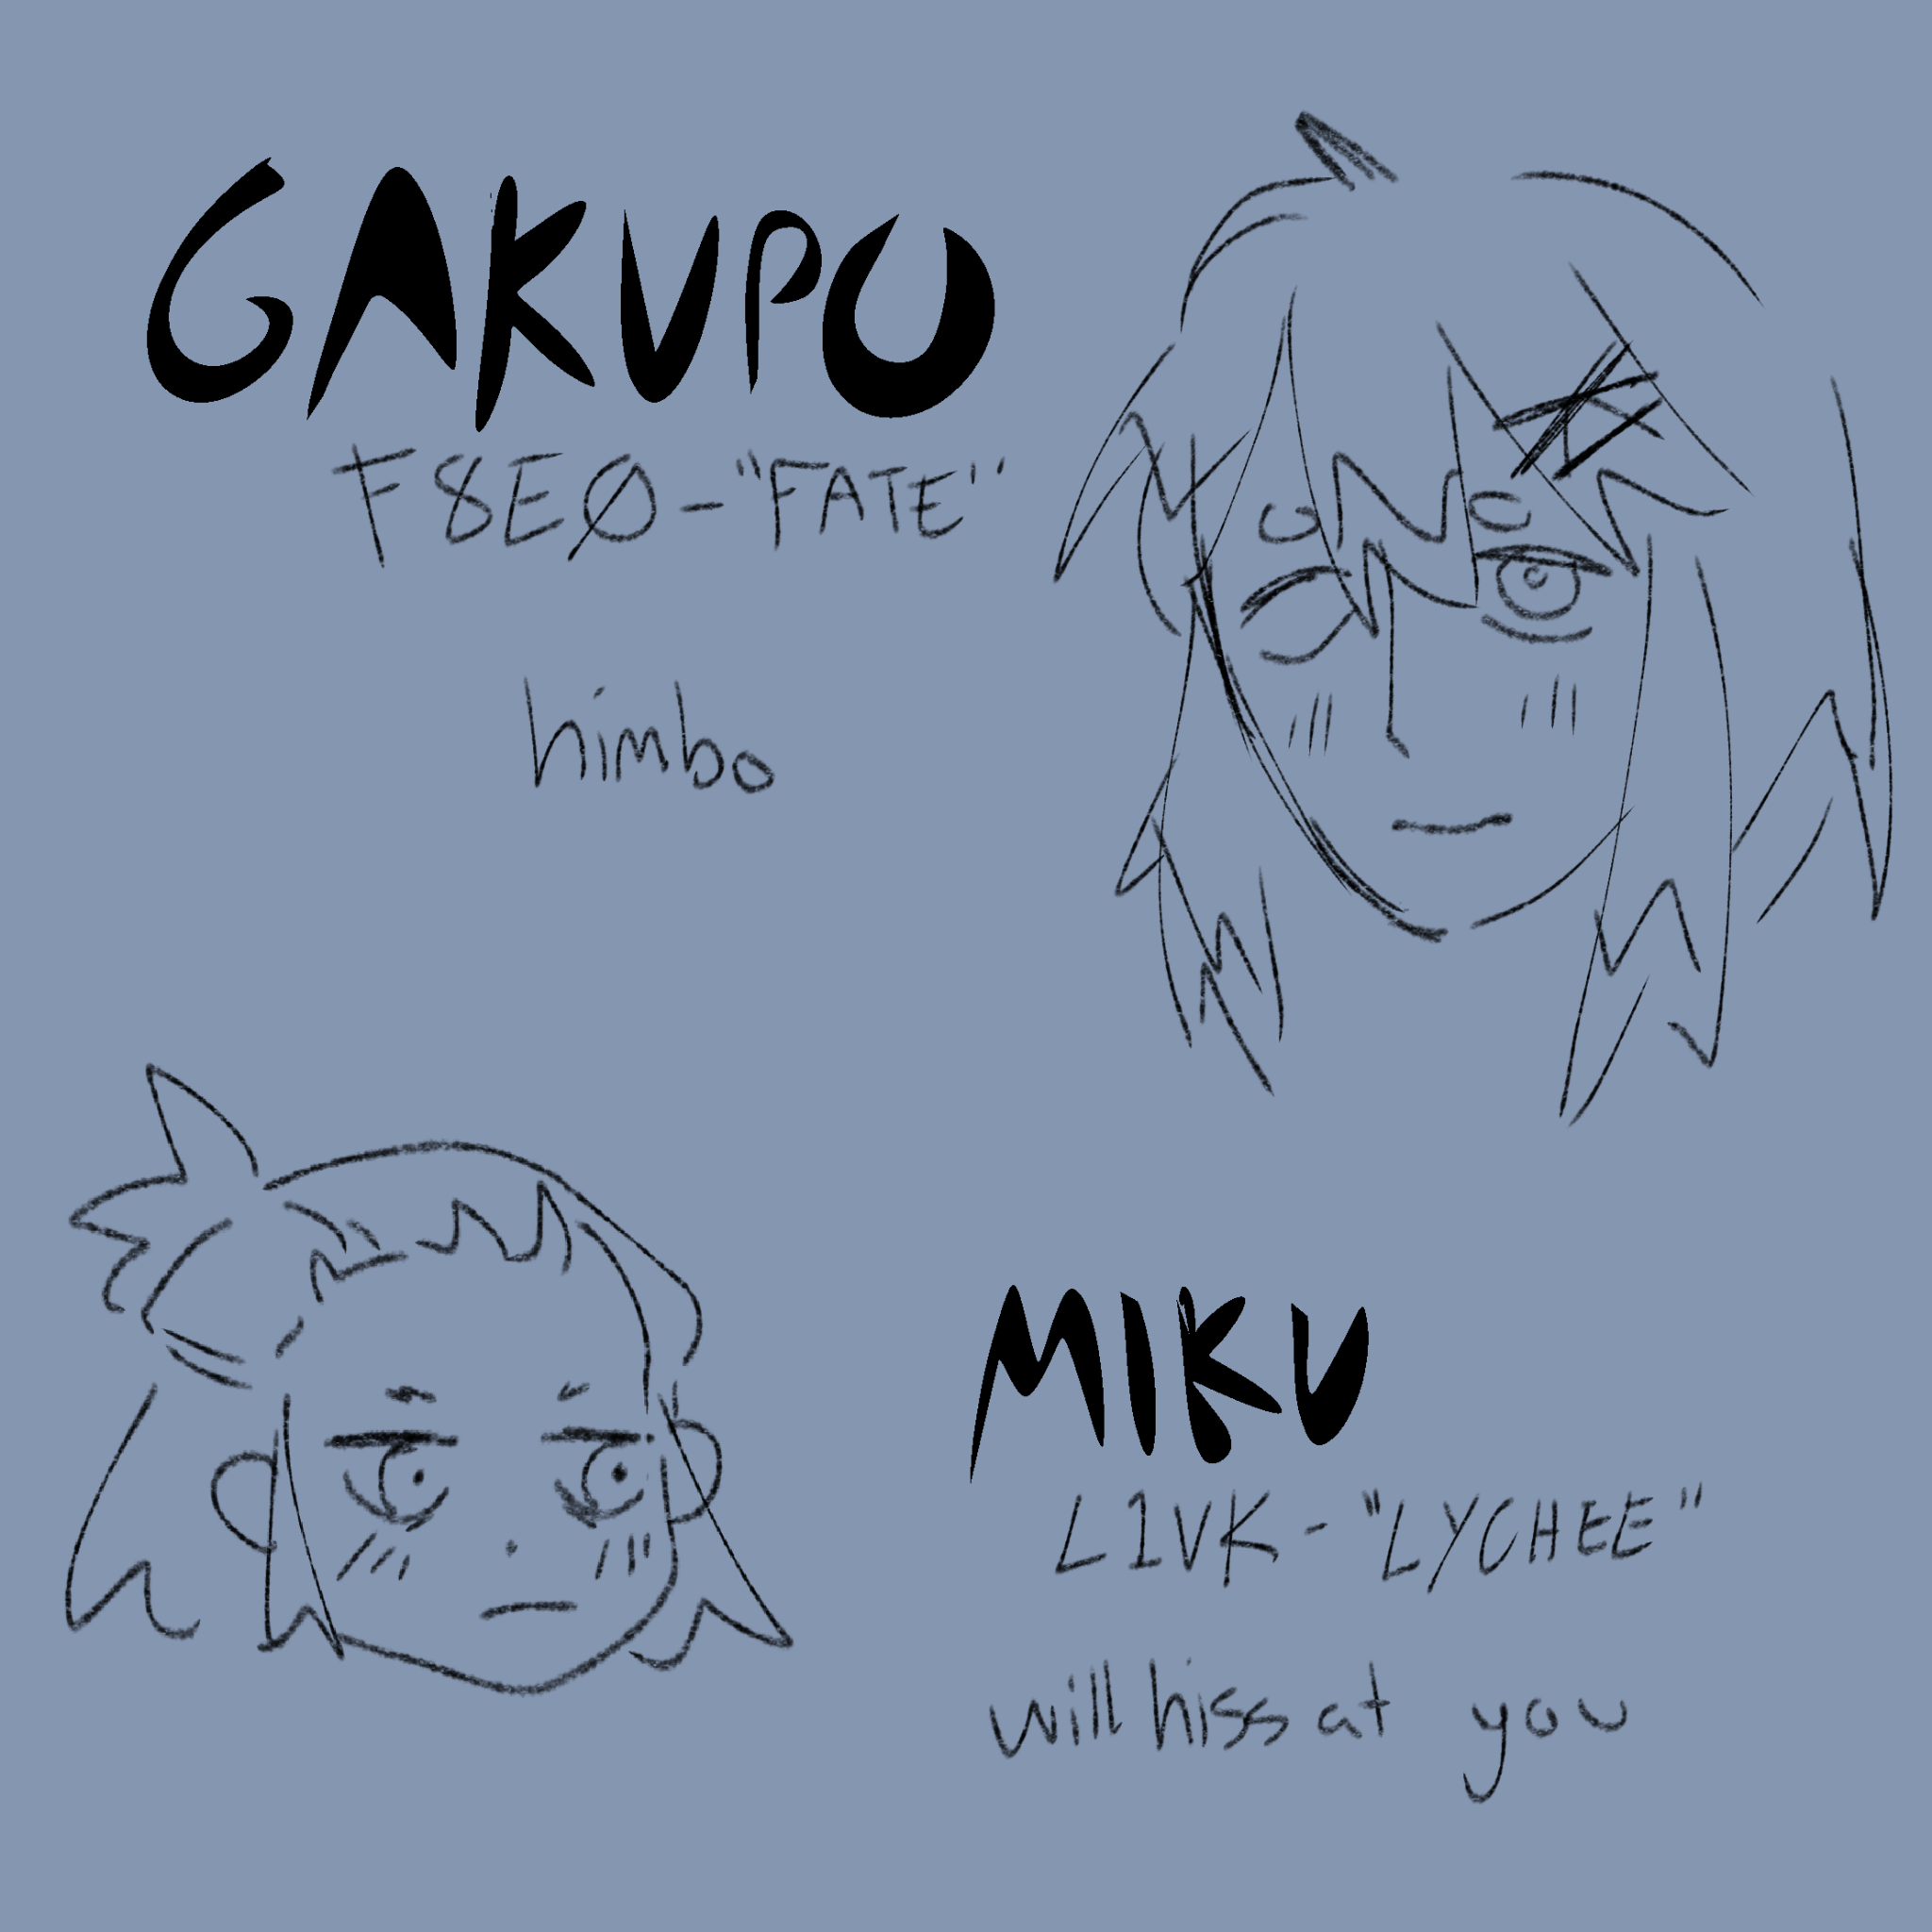 digital drawing of my ocs miku and gakupo. gakupo uses he/him, his code is FE80, and his nickname is fate. miku uses she/her, her code is L1VK, and her nickname is lychee